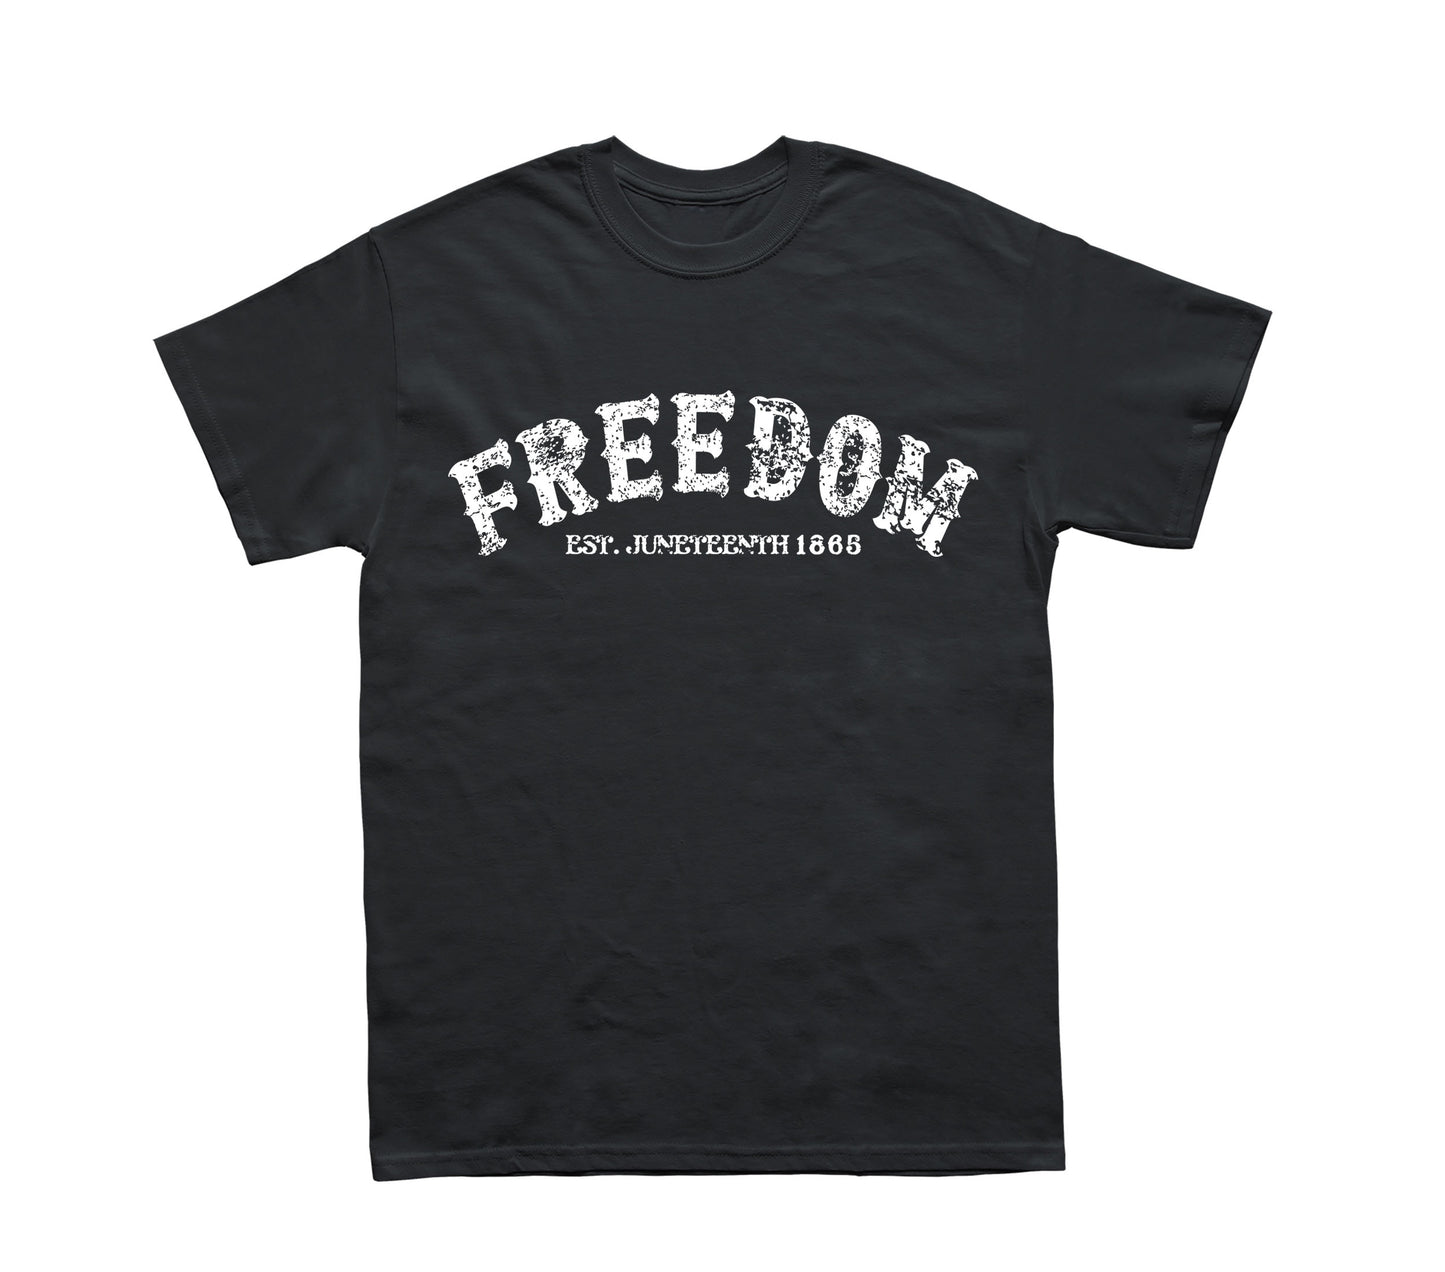 Freedom Shirt